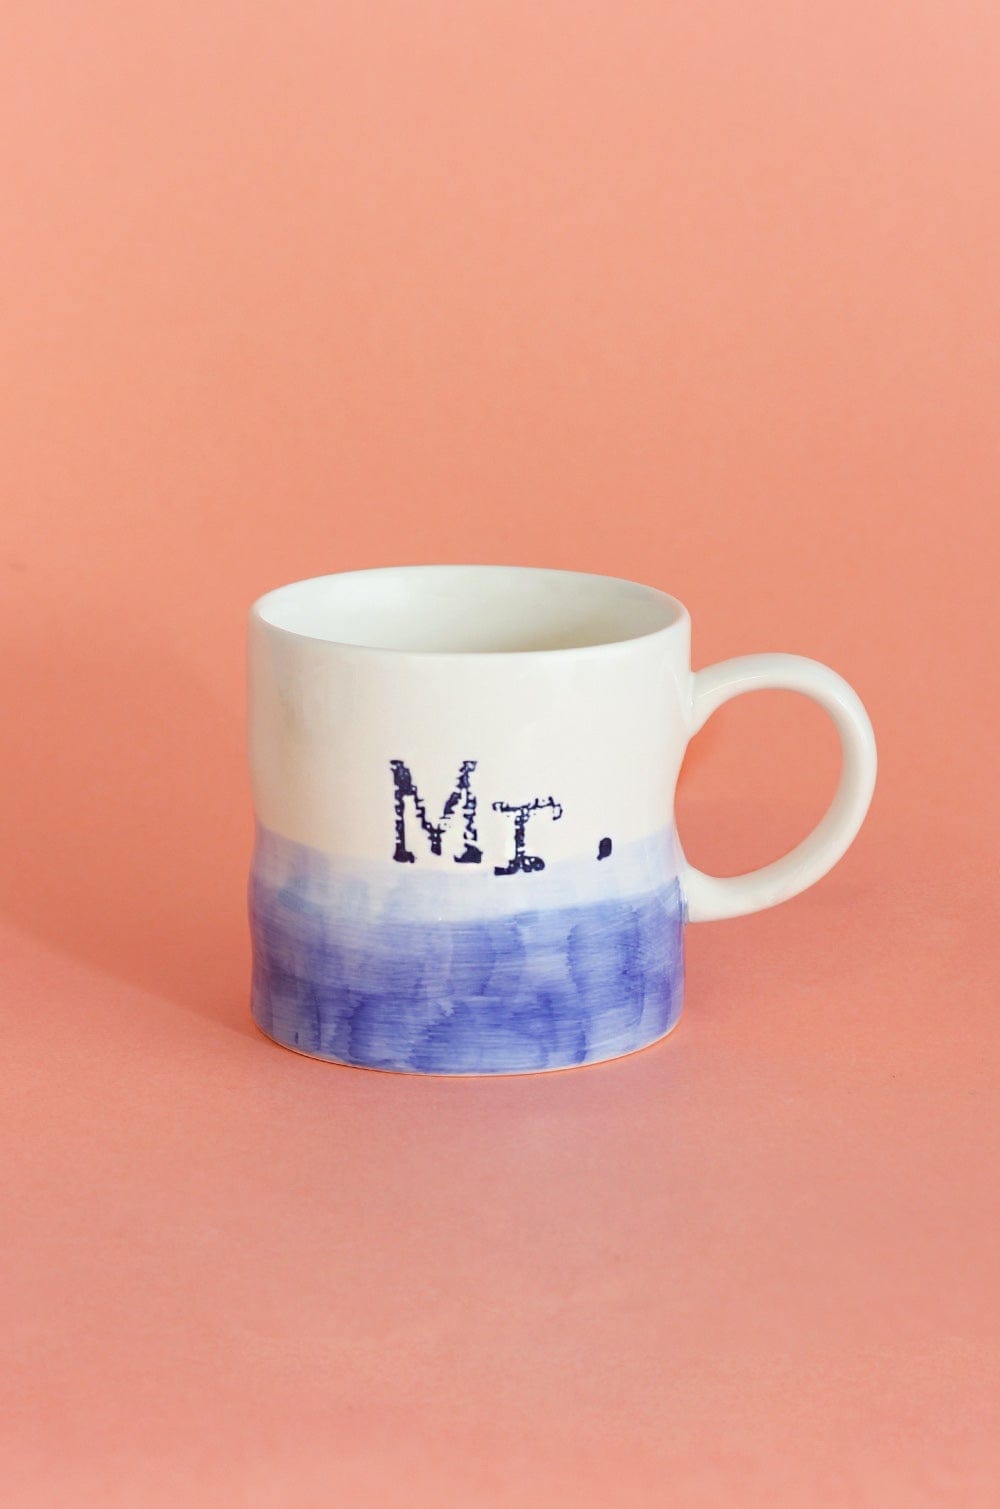 Mr. & Mrs. Handpainted Ceramic Mugs - Set of 2